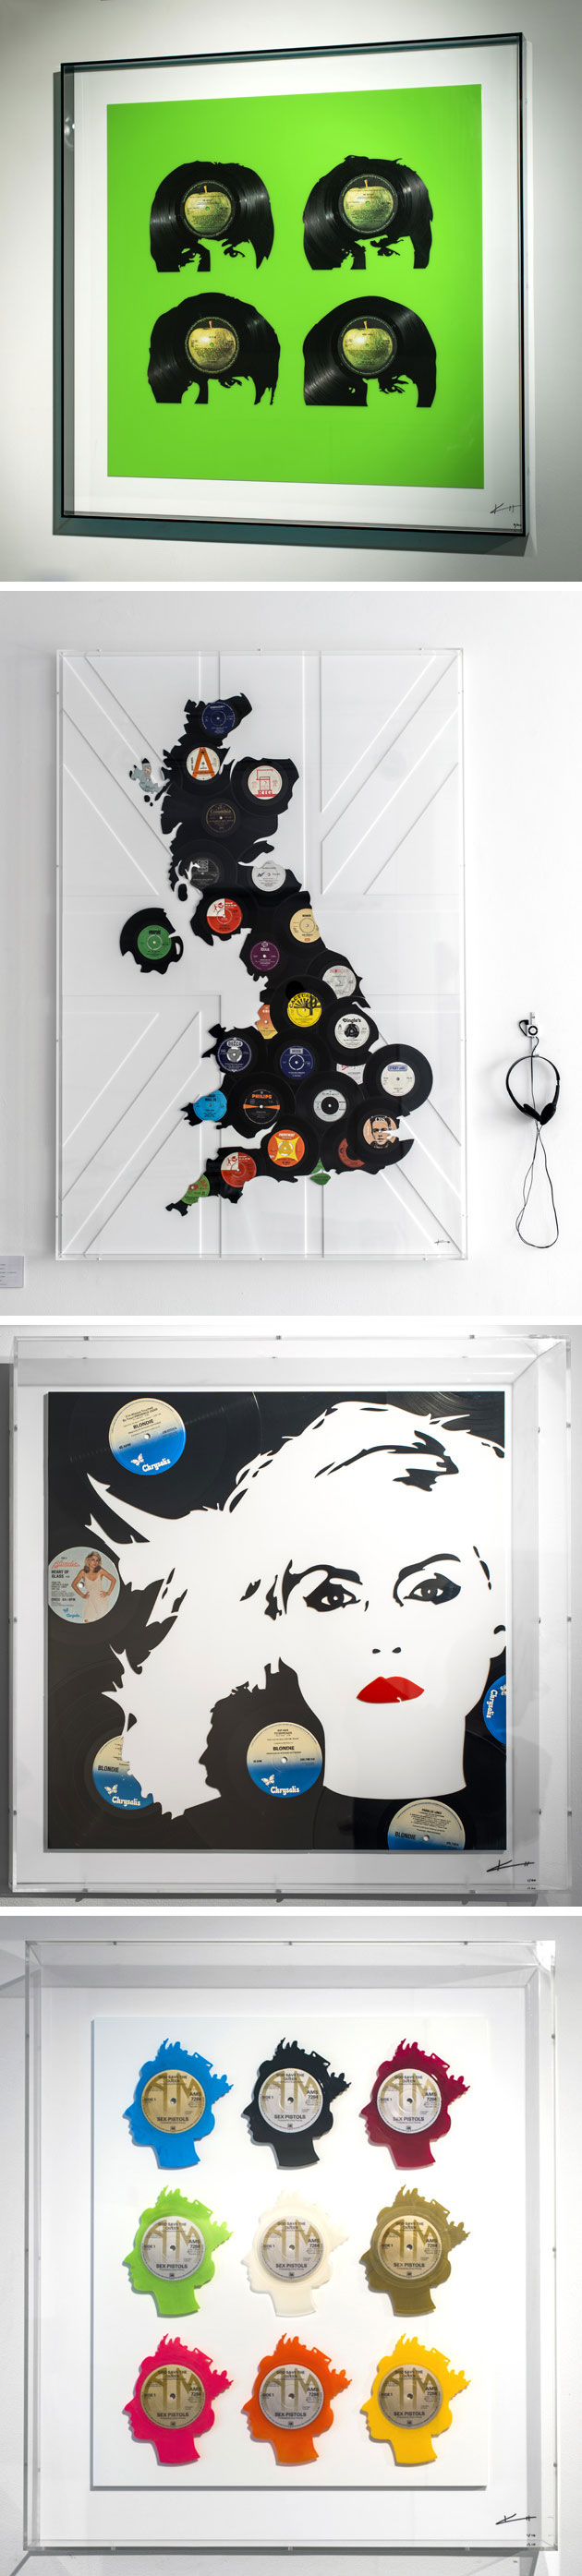 Display Cases for Vinyl Artworks